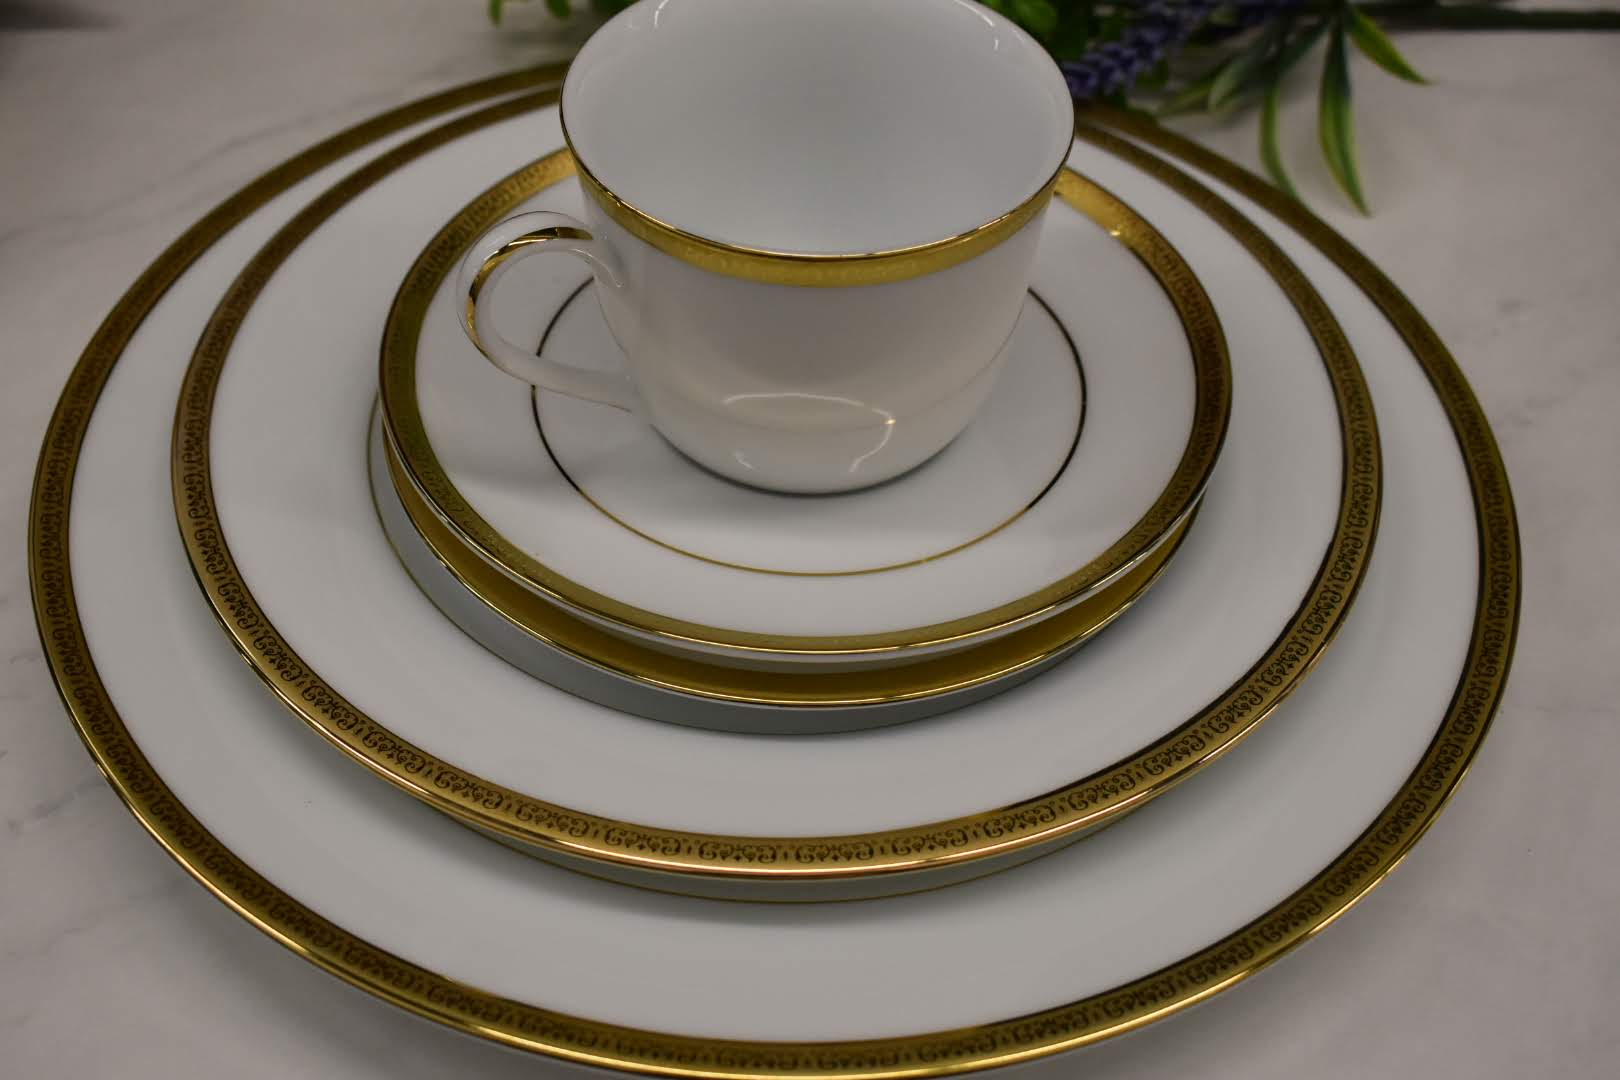 Golden Rim  Etched Design Gold Band - 5-Piece Dinner Set - 1 place setting - Fine Porcelain China - White Color